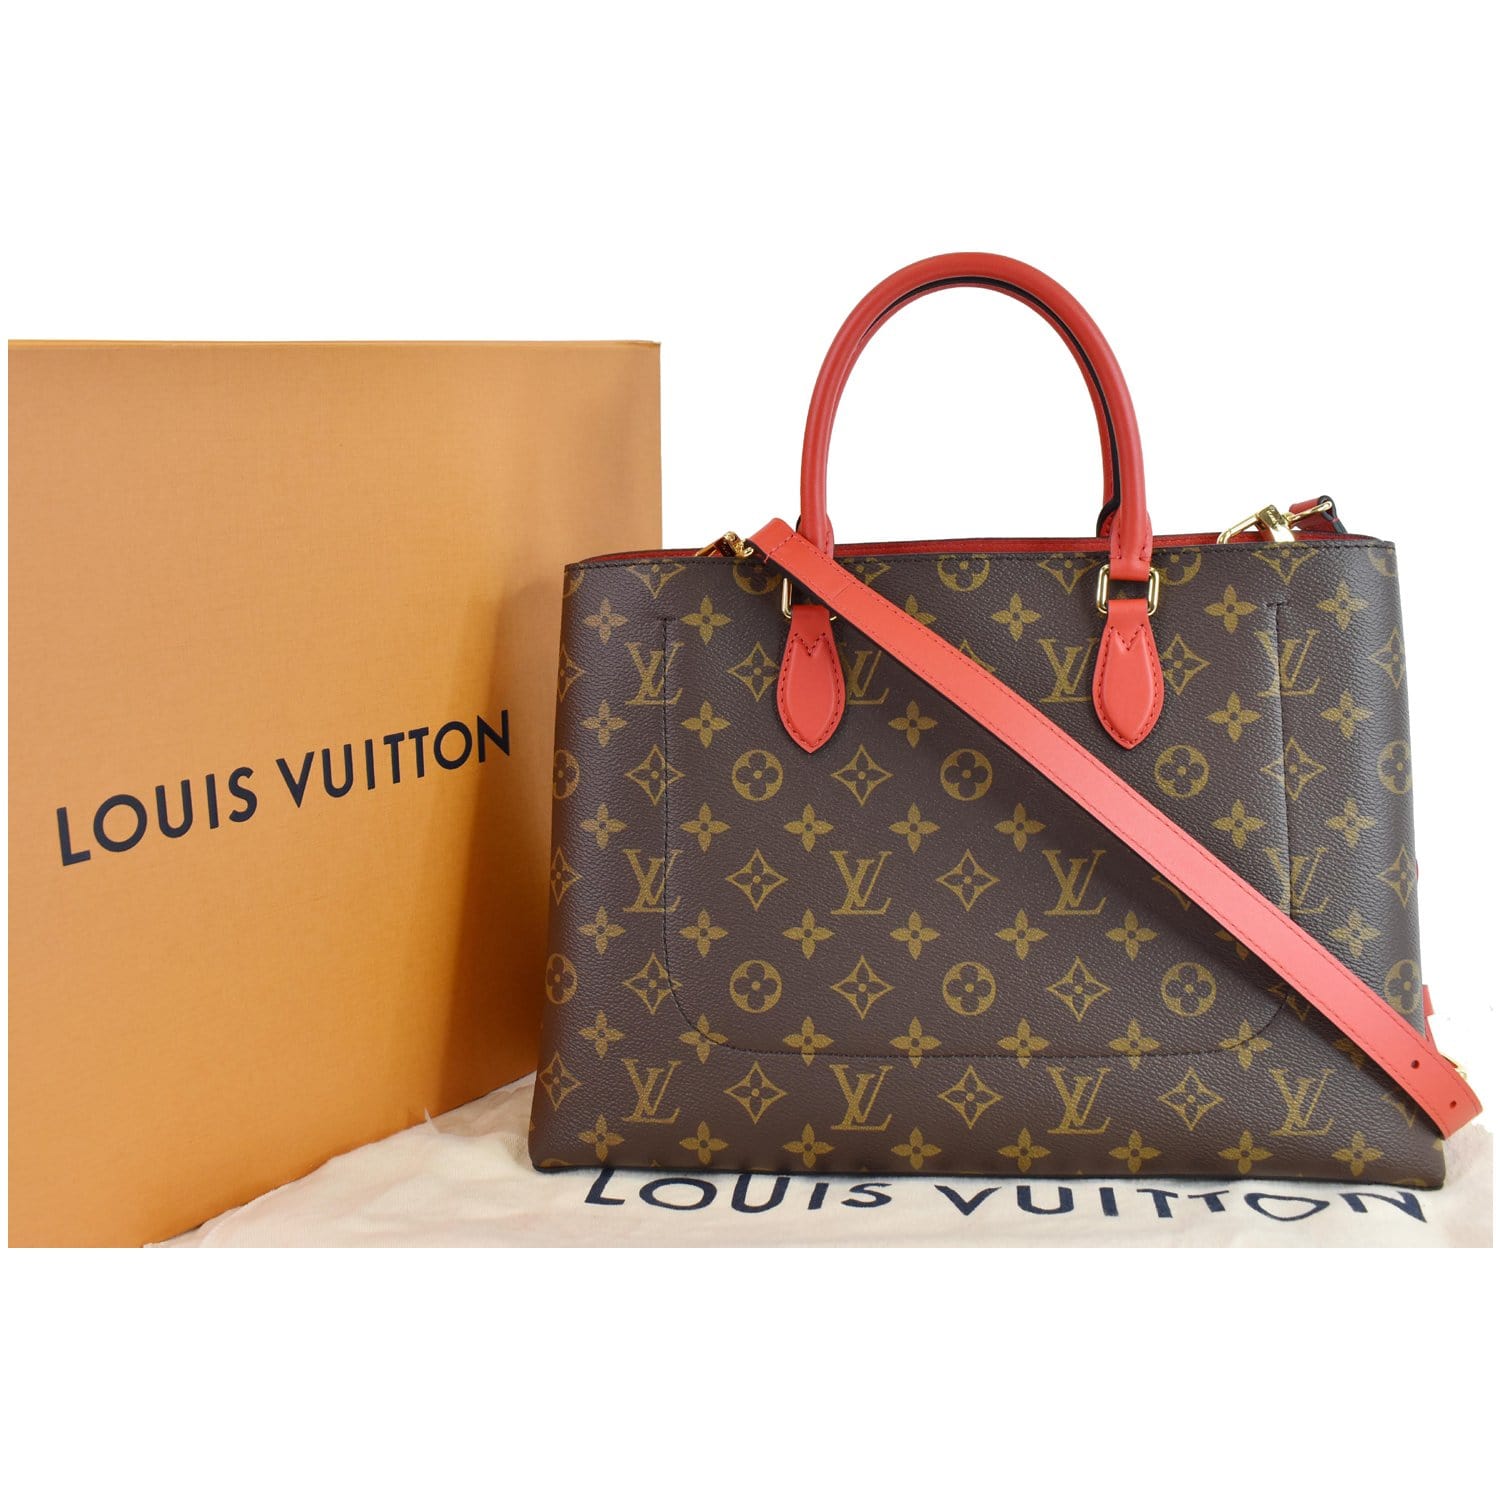 Classic Brown Louis Vuitton Handbag with red lining  Louis vuitton totes, Louis  vuitton, Louis vuitton handbags